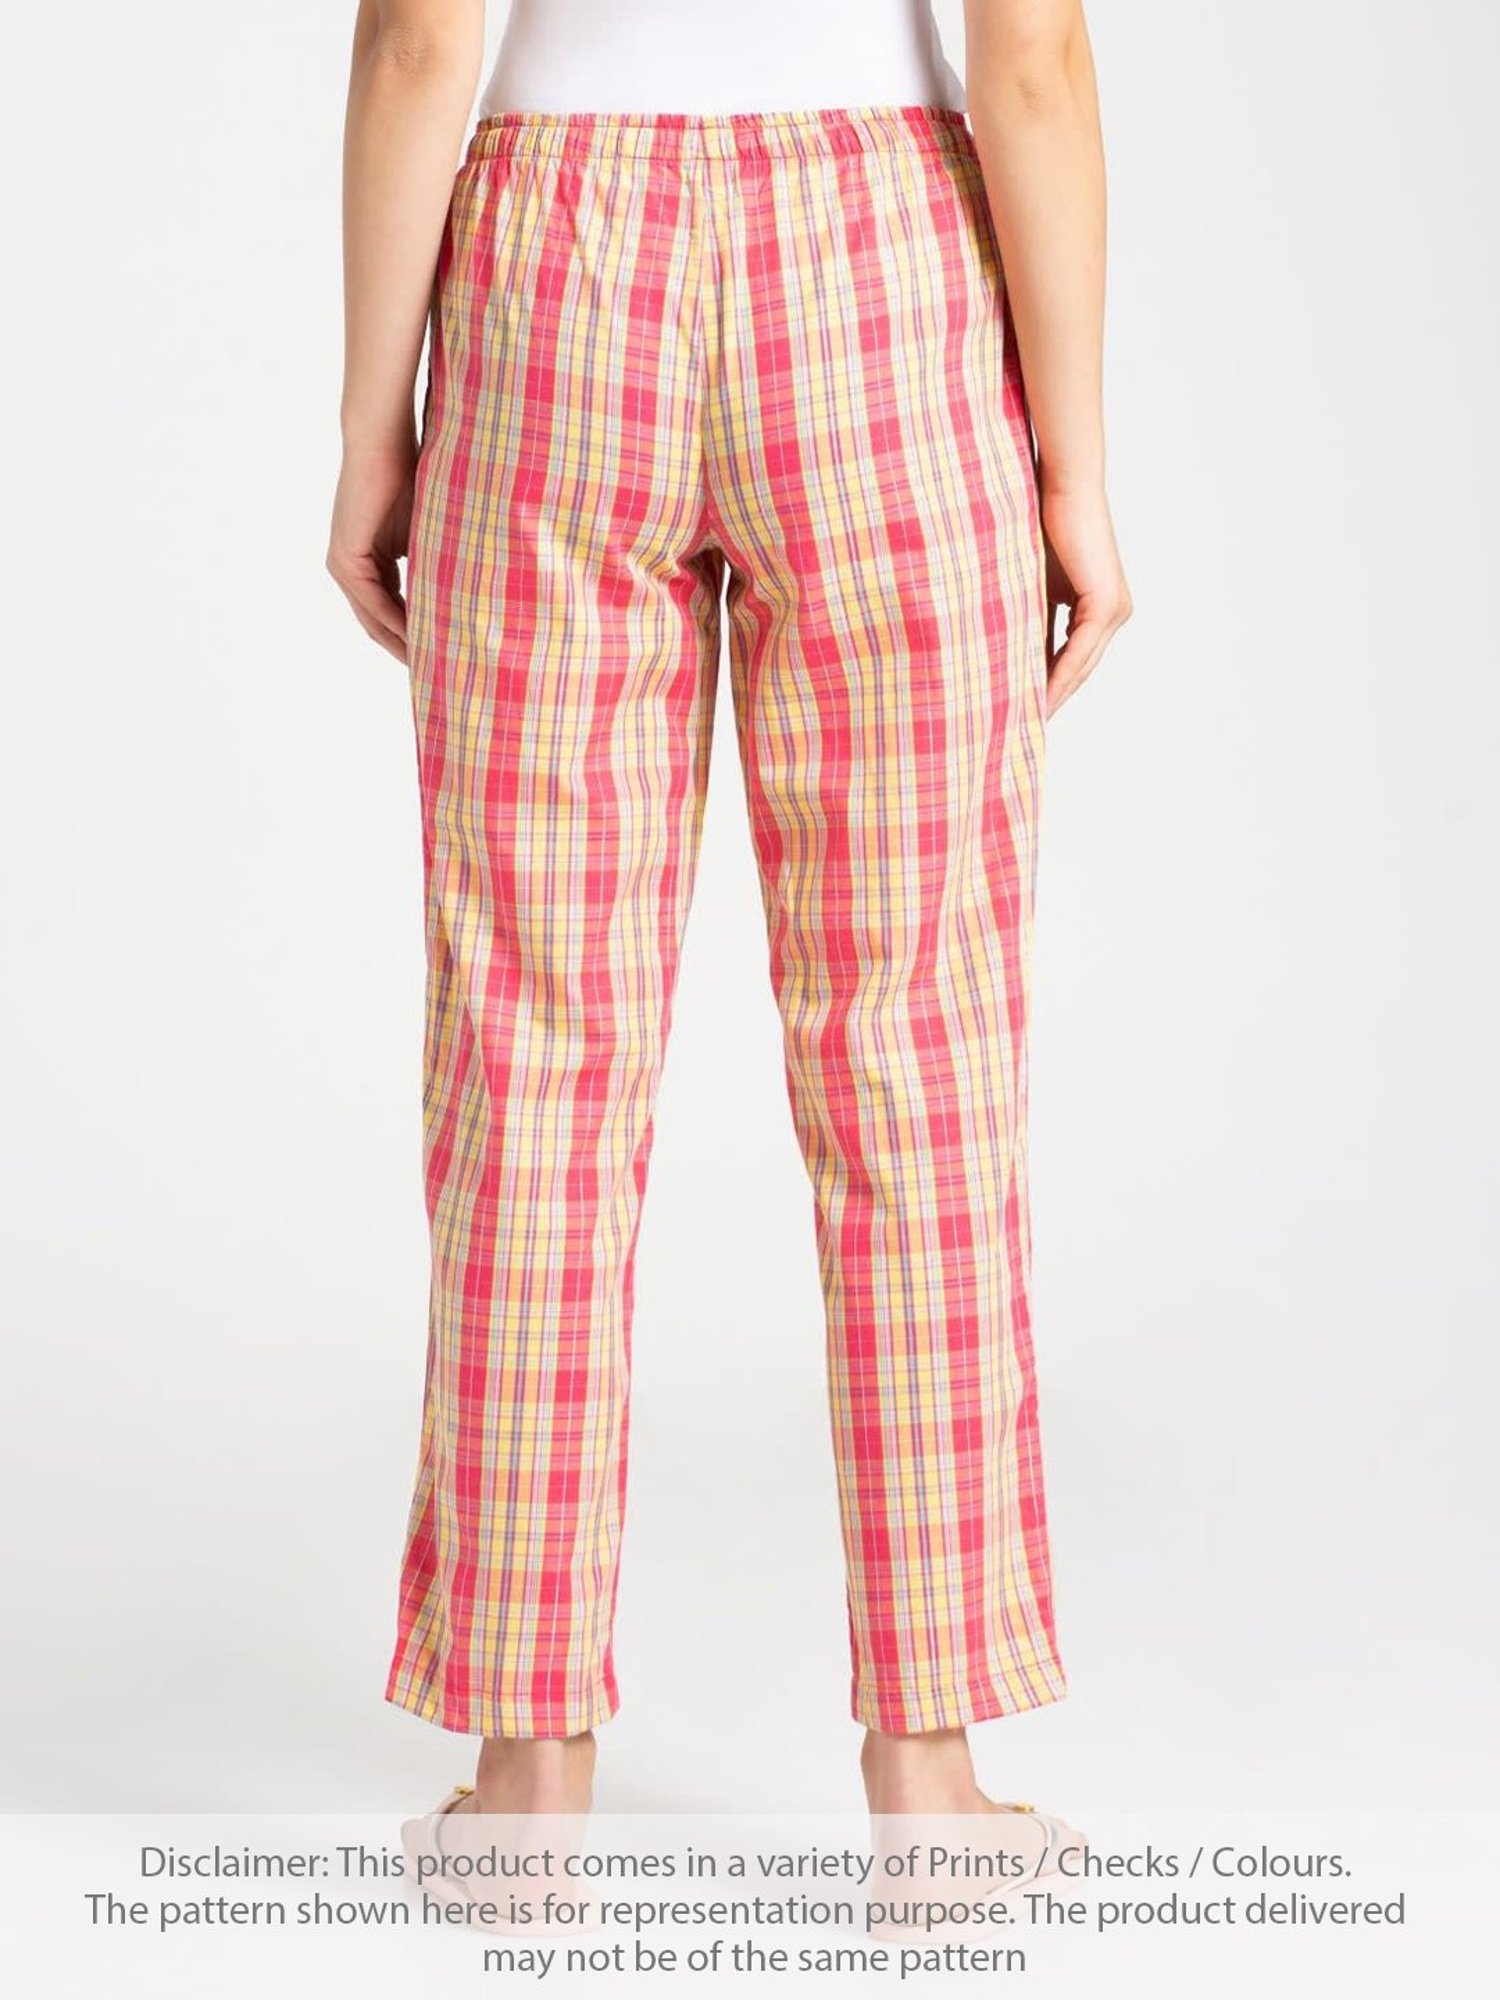 Jockey Women's Cotton Checkered Pajama – Online Shopping site in India